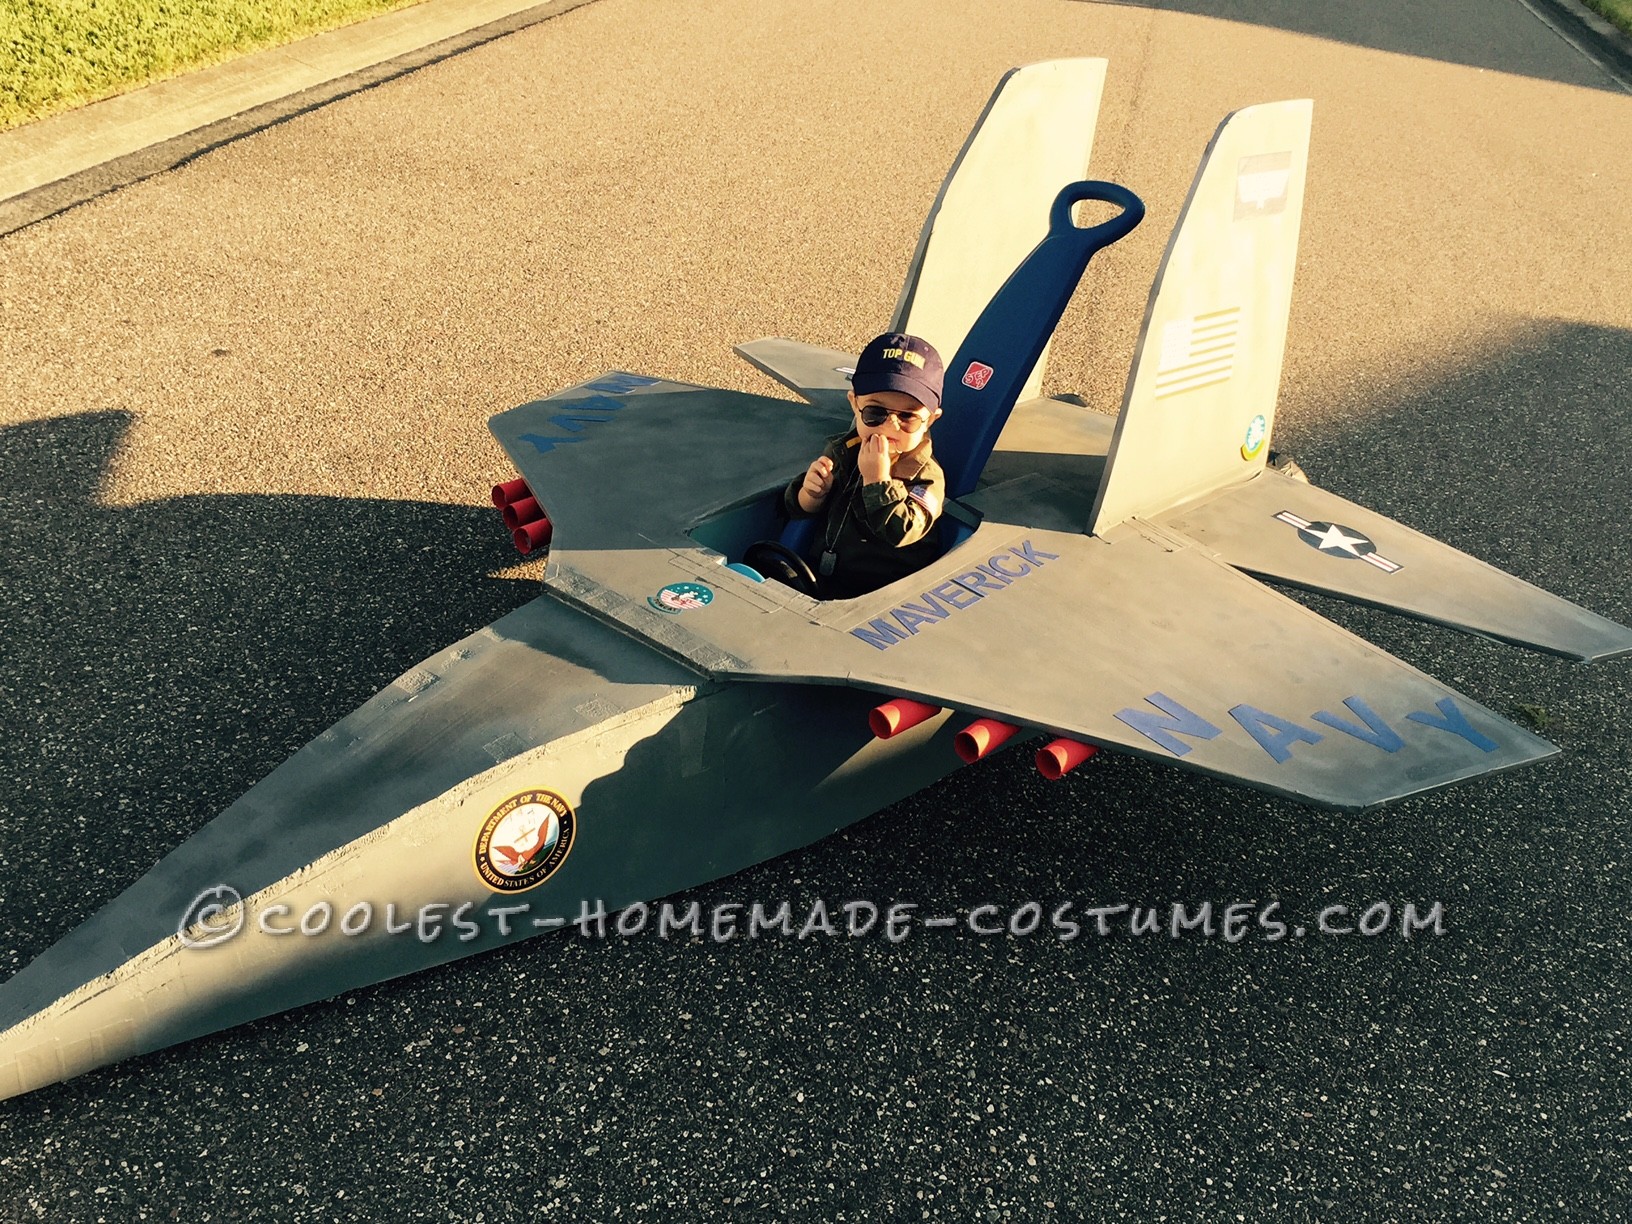 Top Gun Baby Pilot Costume with an F-14 Tomcat Jet Plane